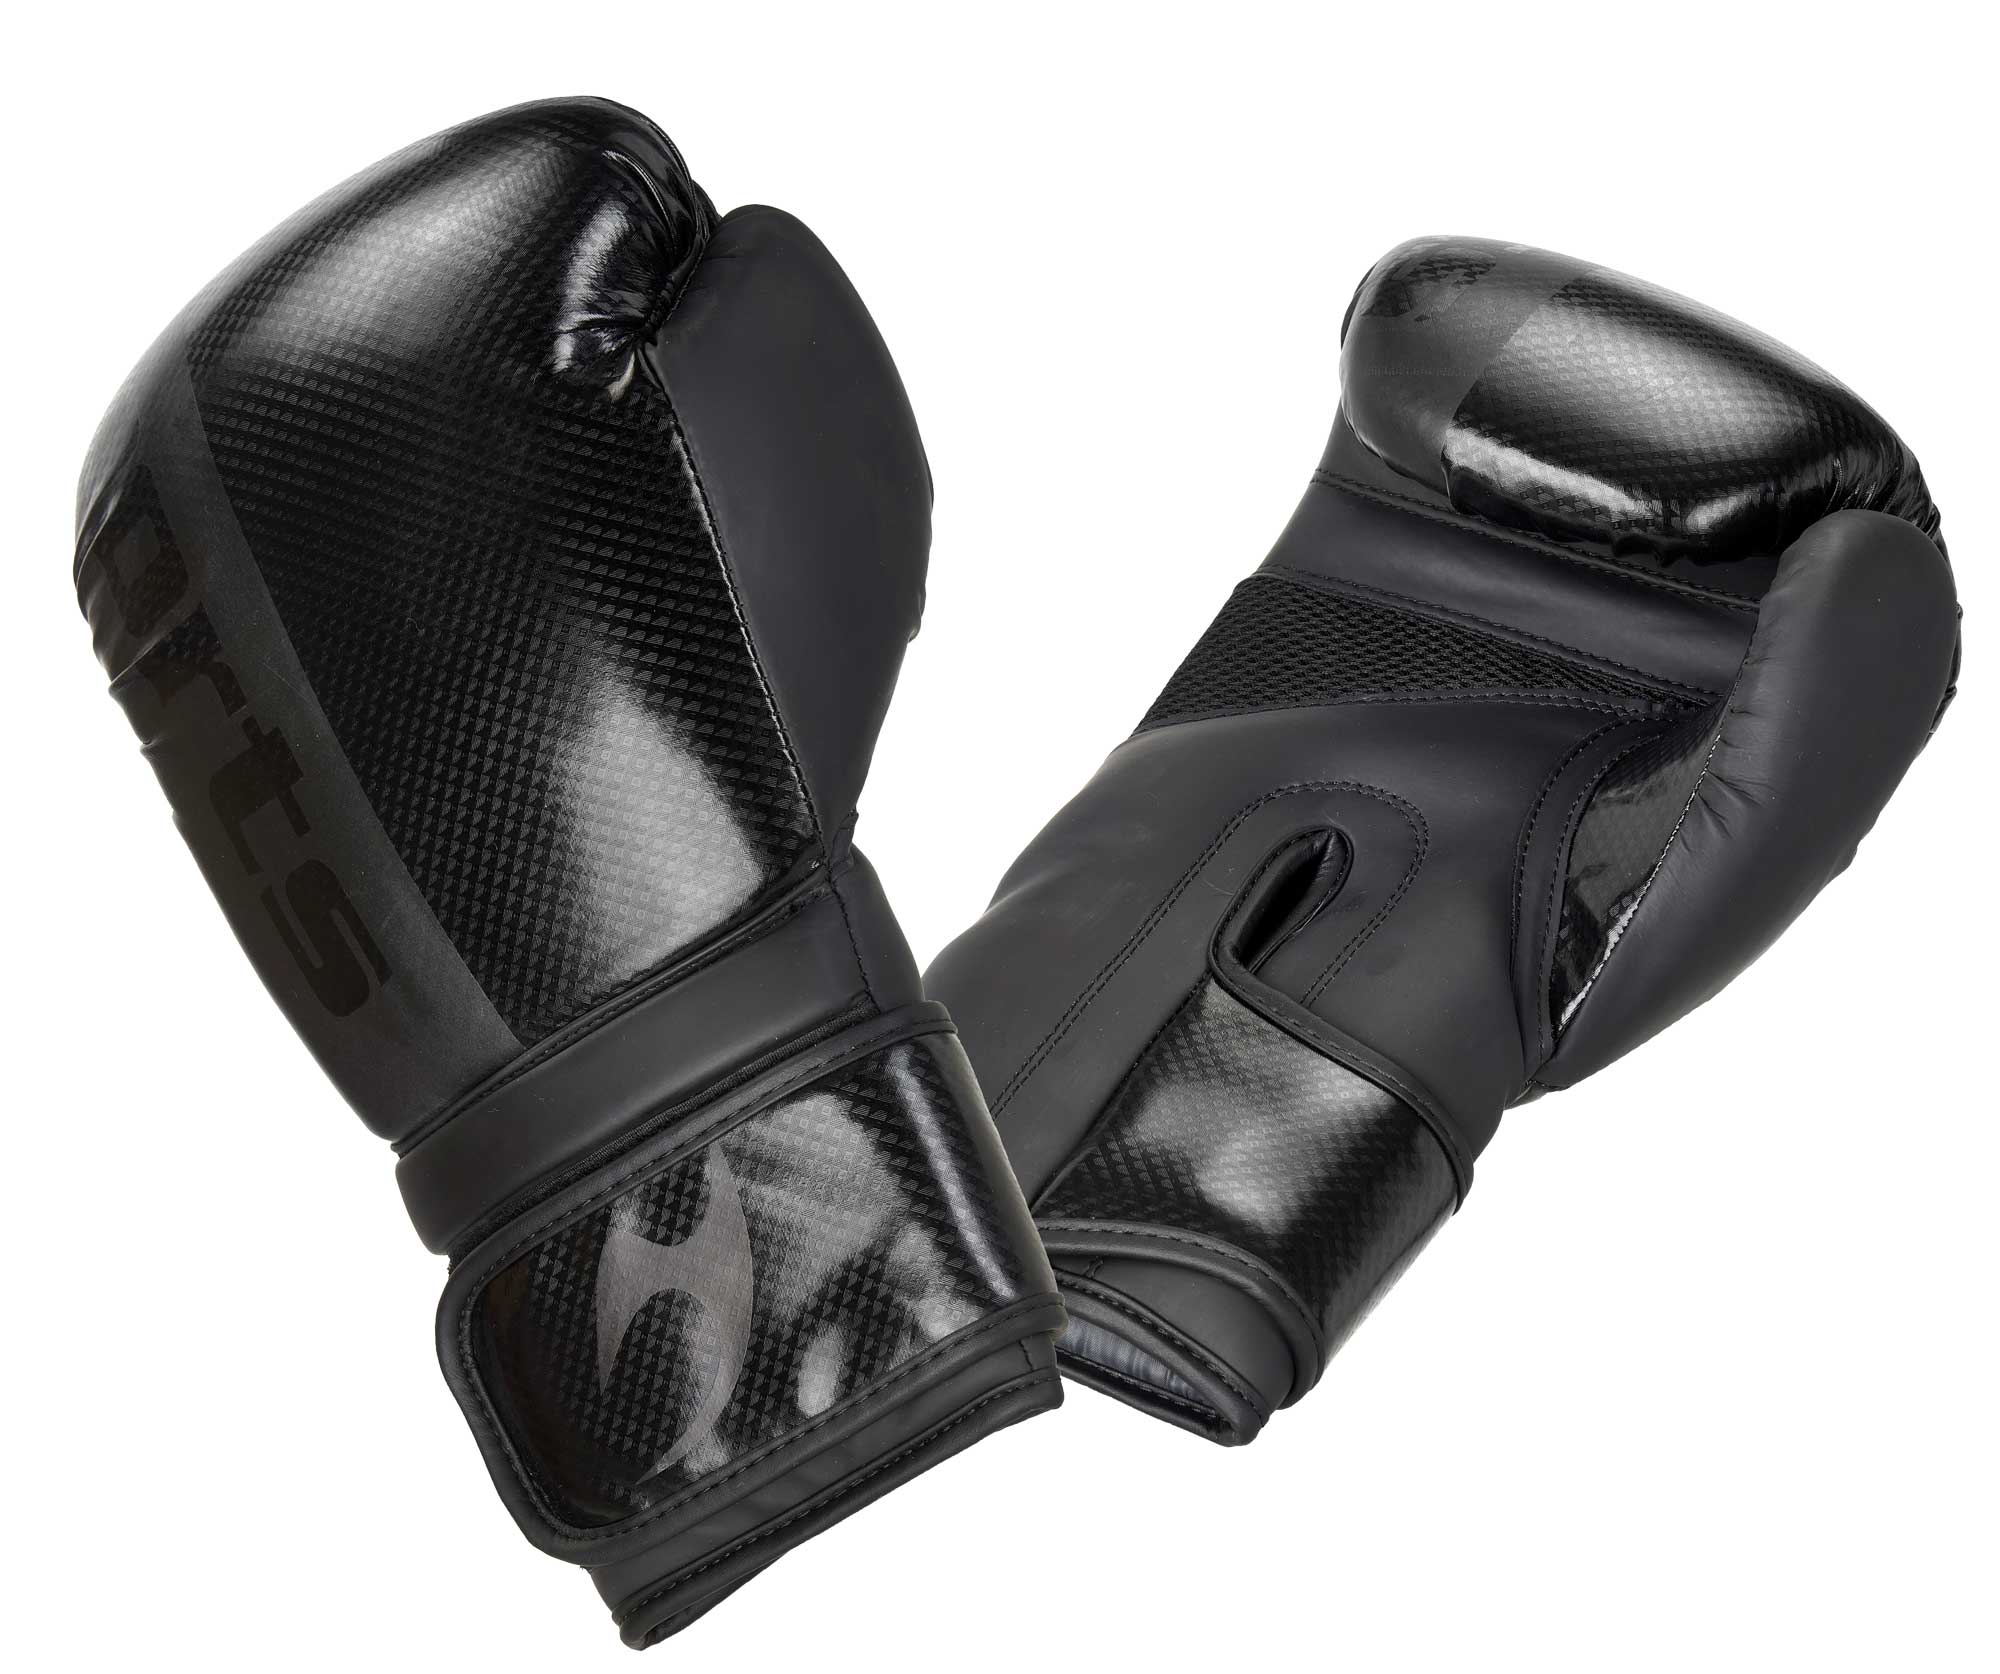 Ju-Sports Boxing Gloves Assassin